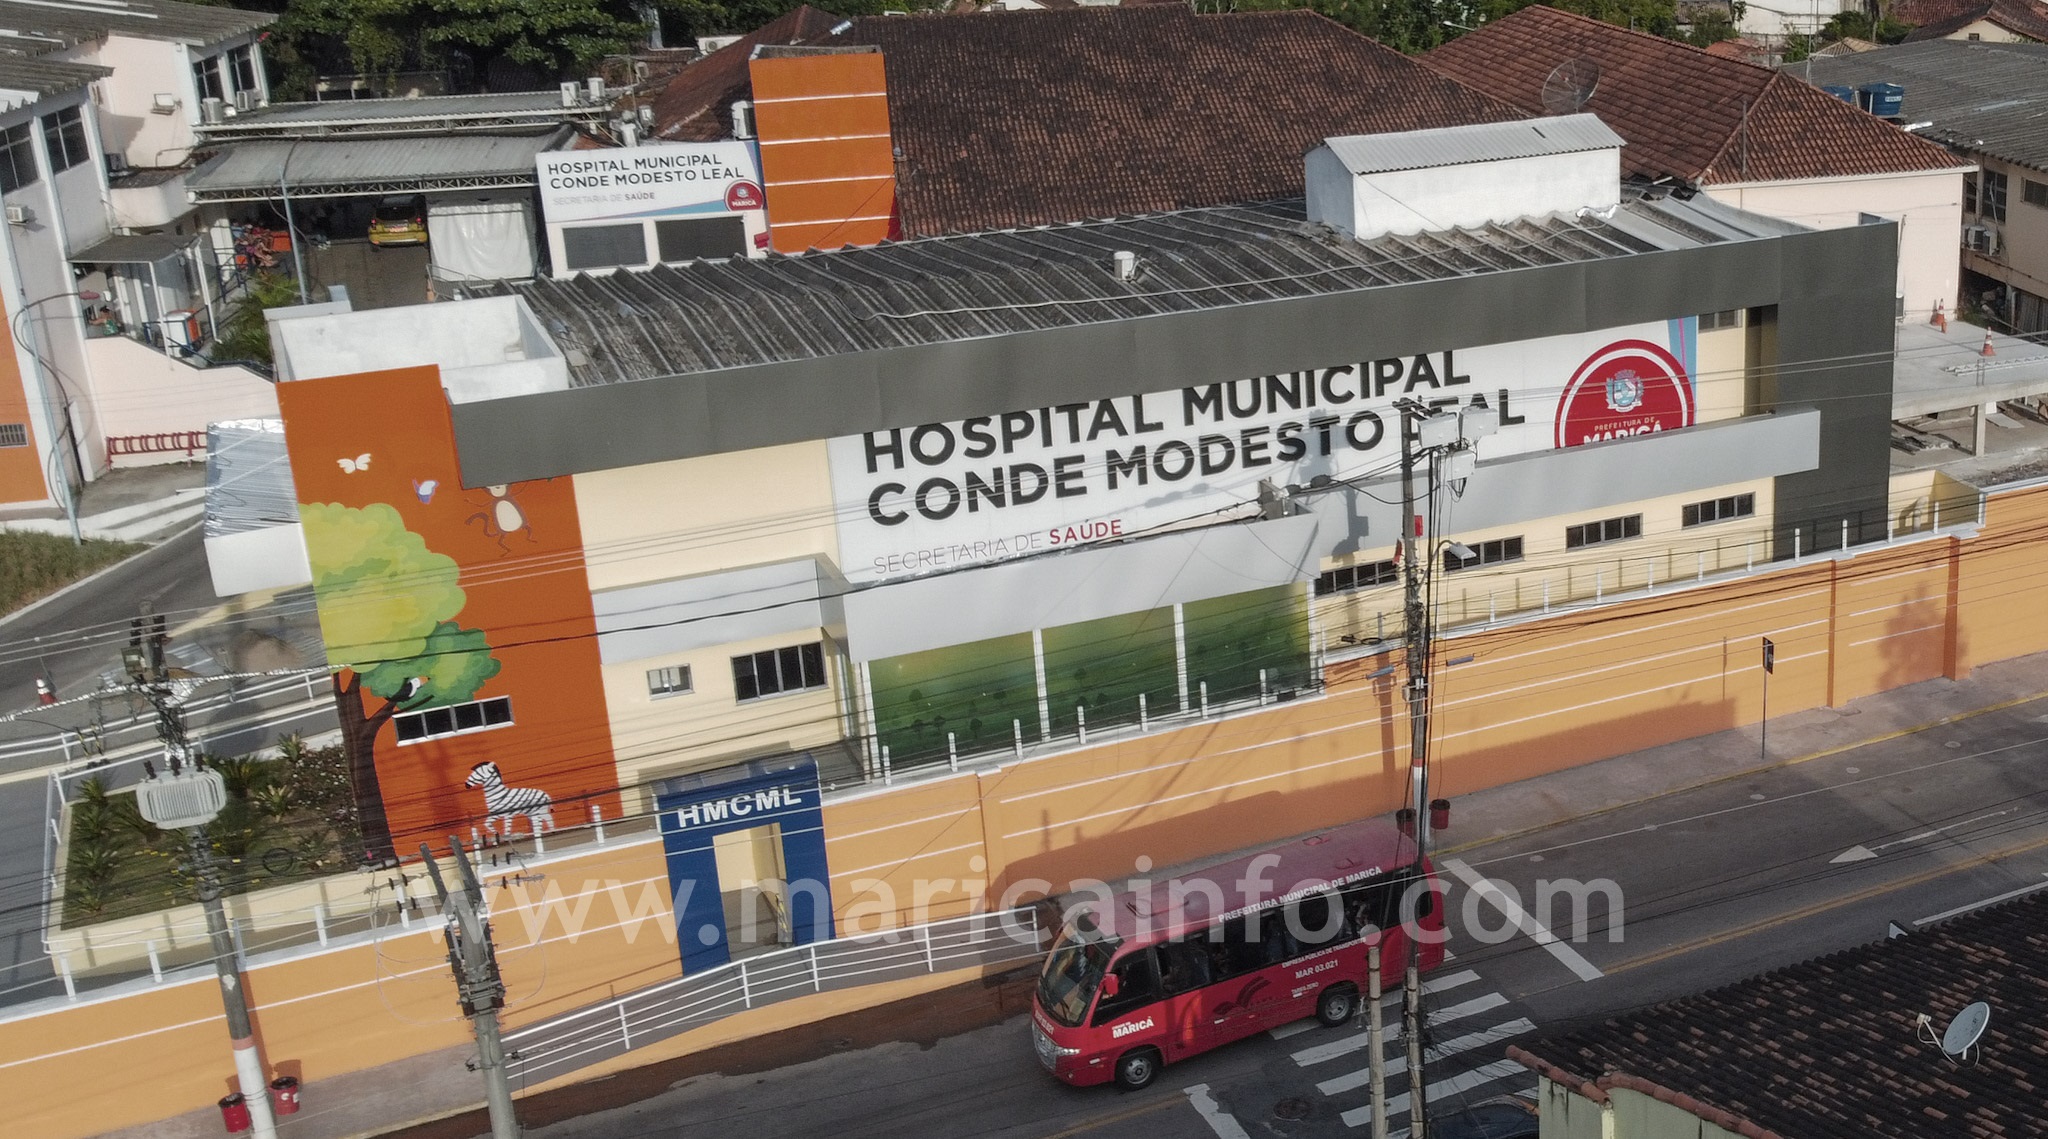 Marica Hospital Municipal Conde Modesto Leal RJ